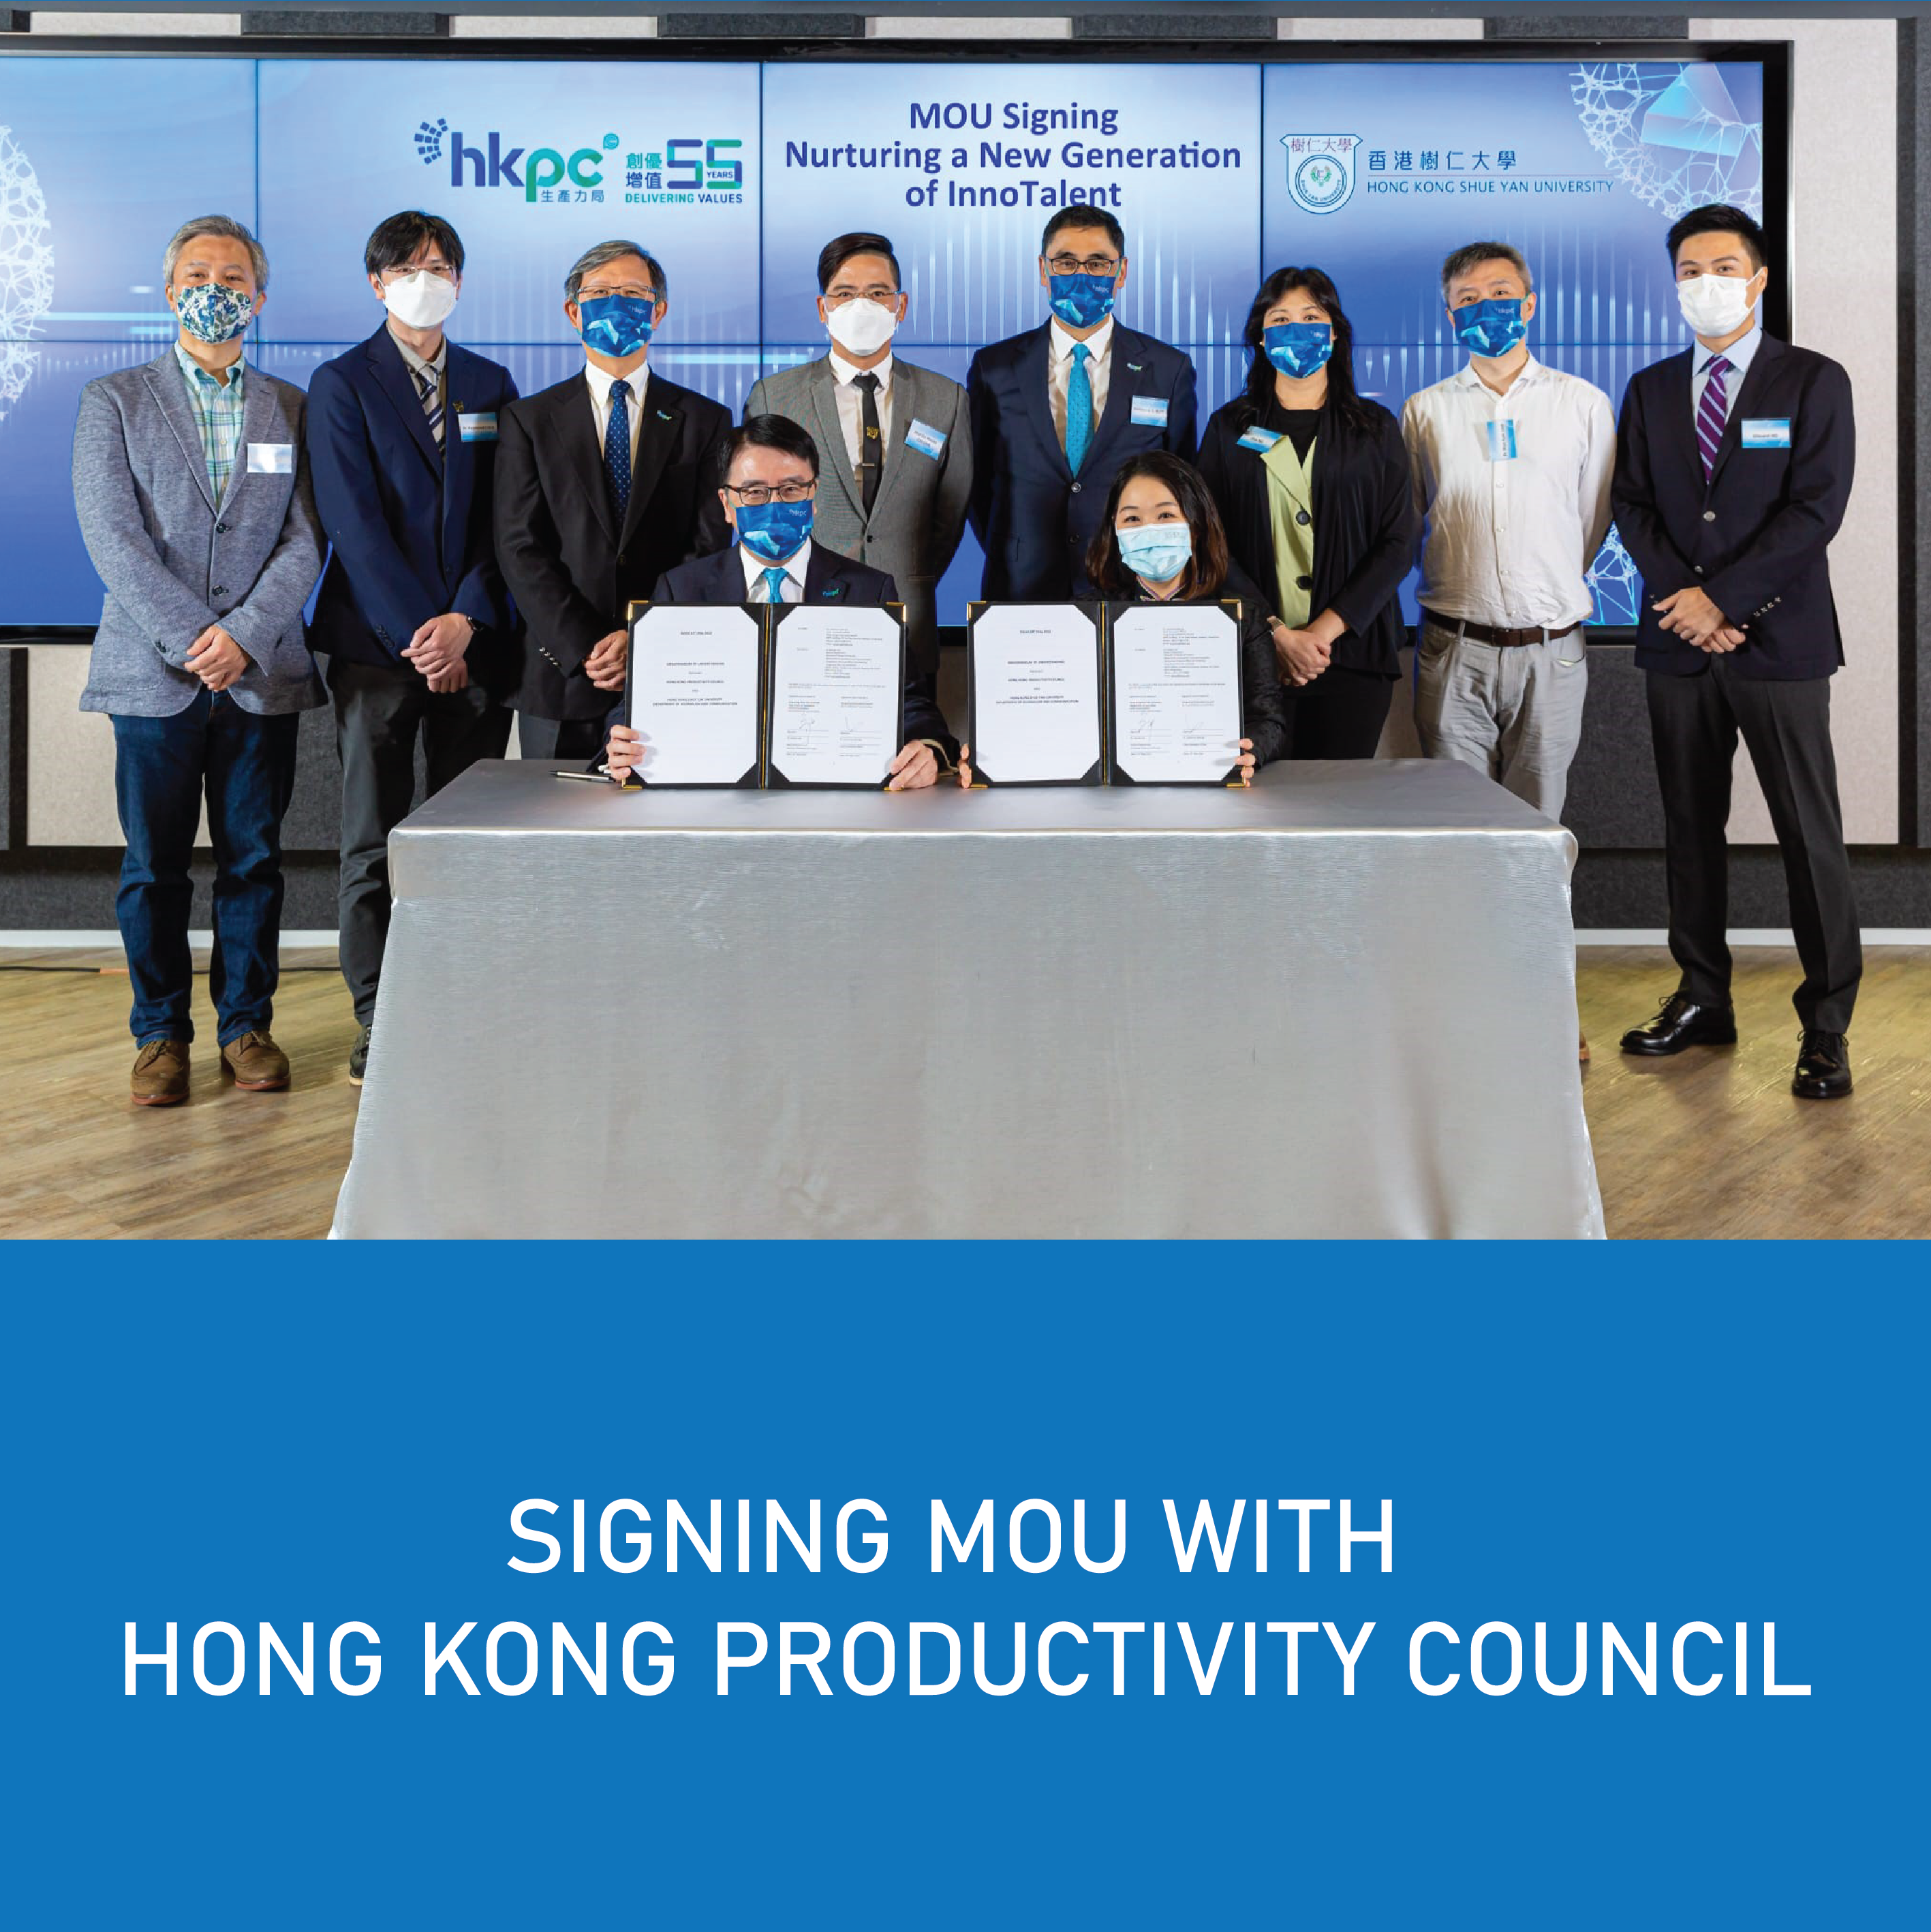 Signing MOU with Hong Kong Productivity Council